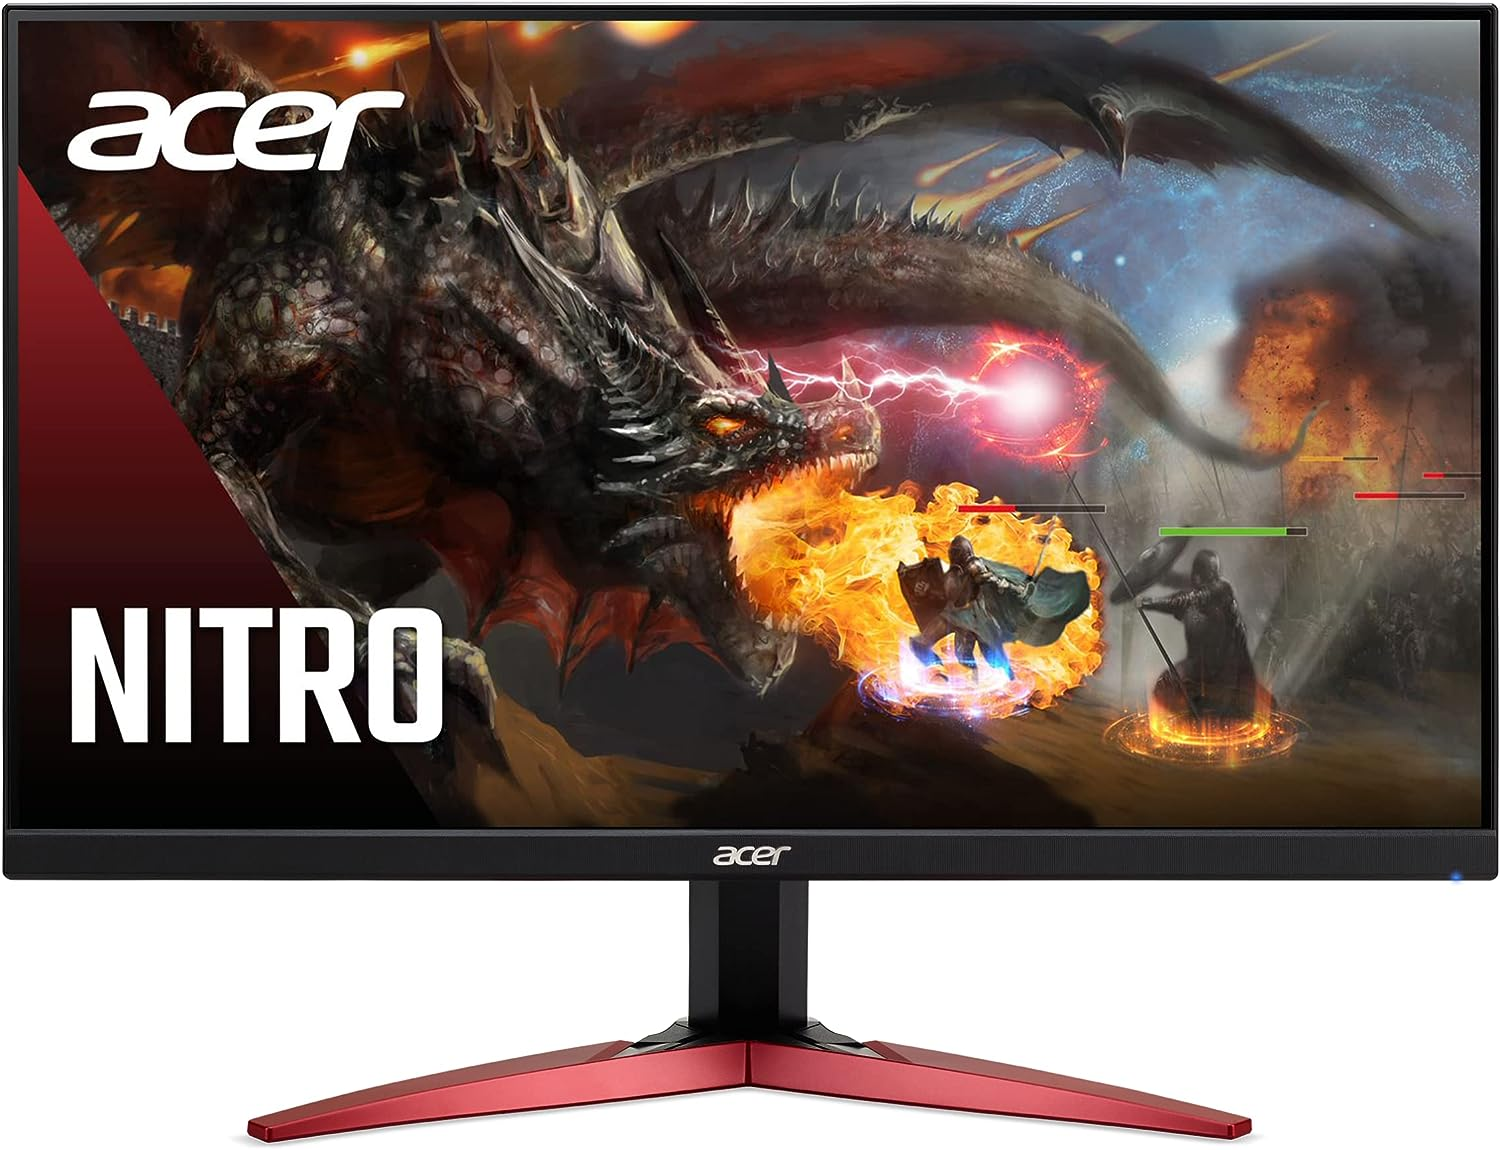 Gaming Monitor Deals - Acer Nitro KG241Y Sbiip 23.8” Full HD (1920 x 1080) VA Gaming Monitor